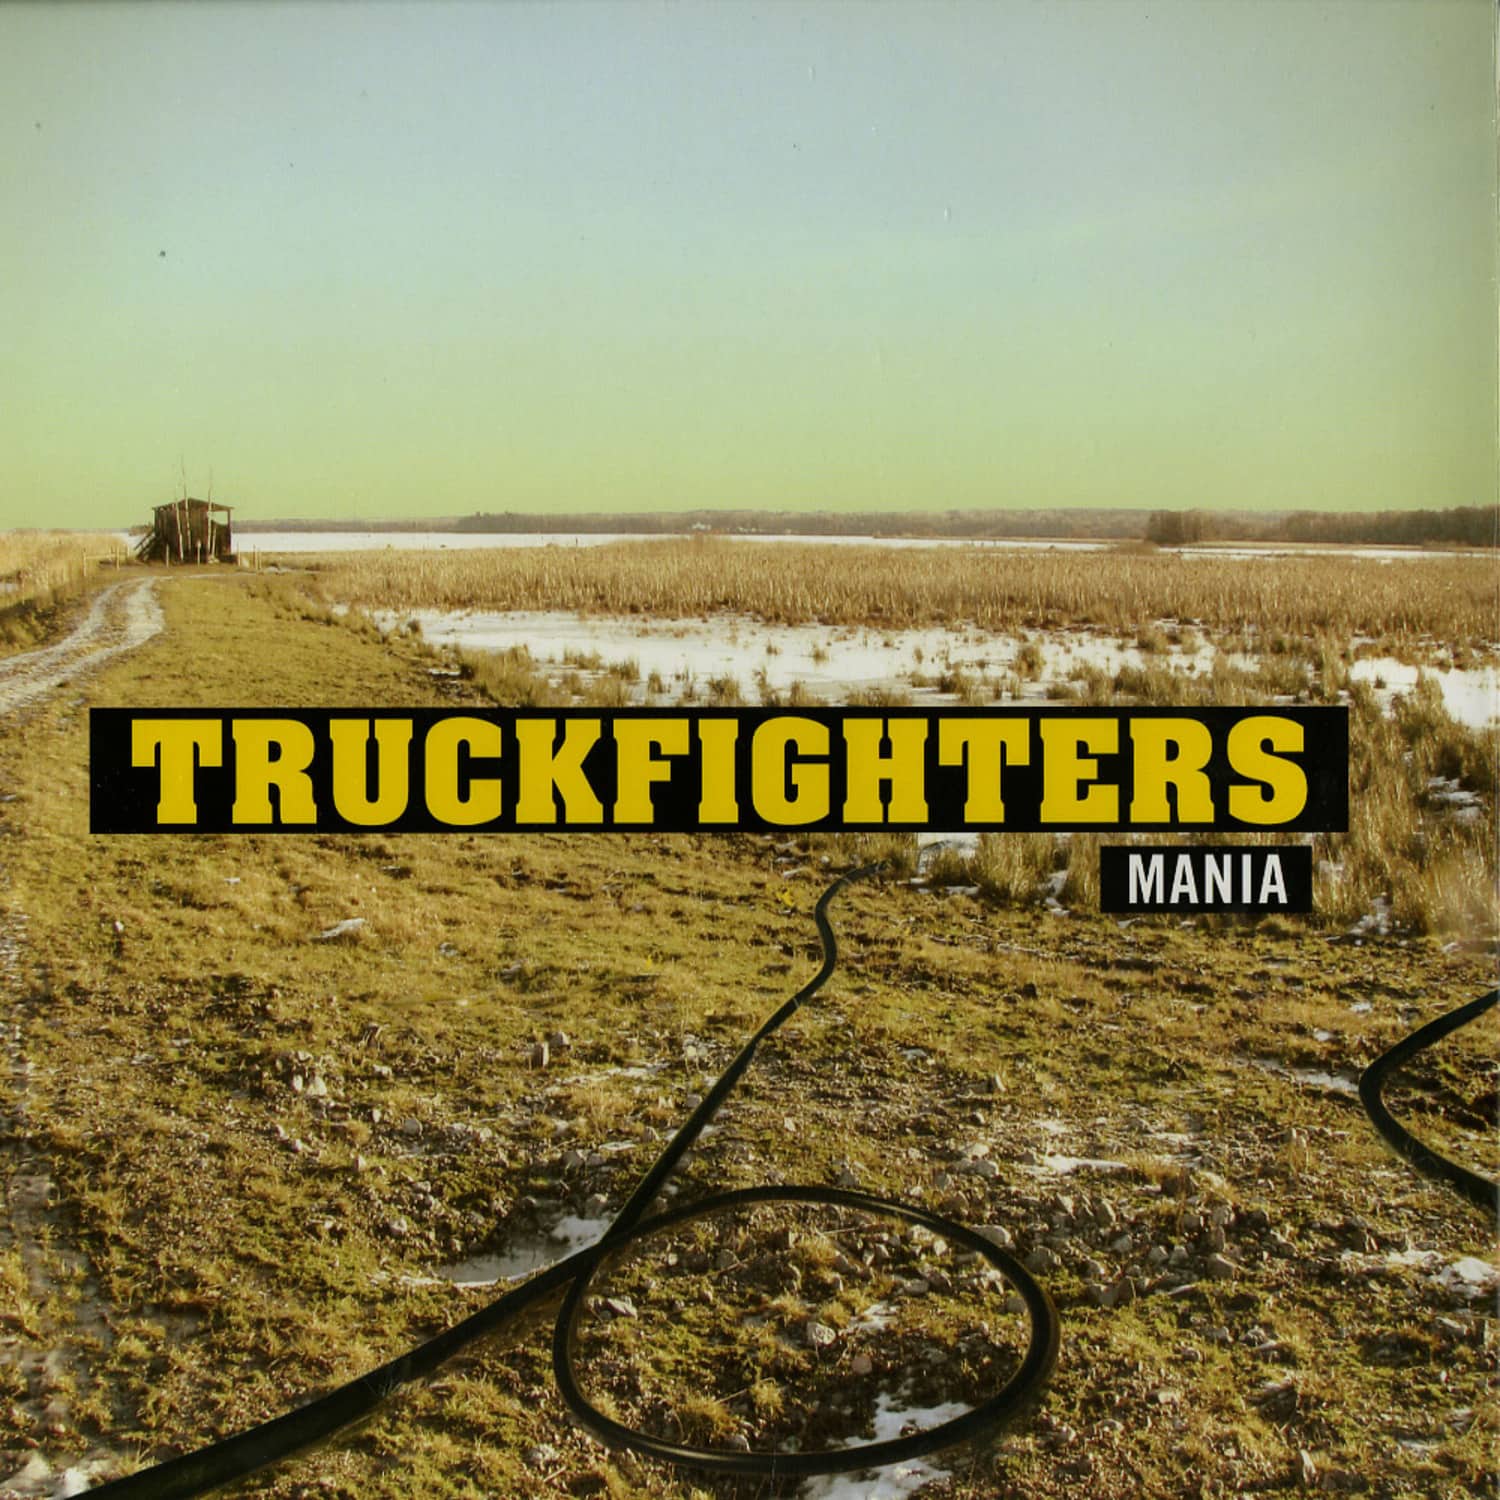 Truckfighters - MANIA